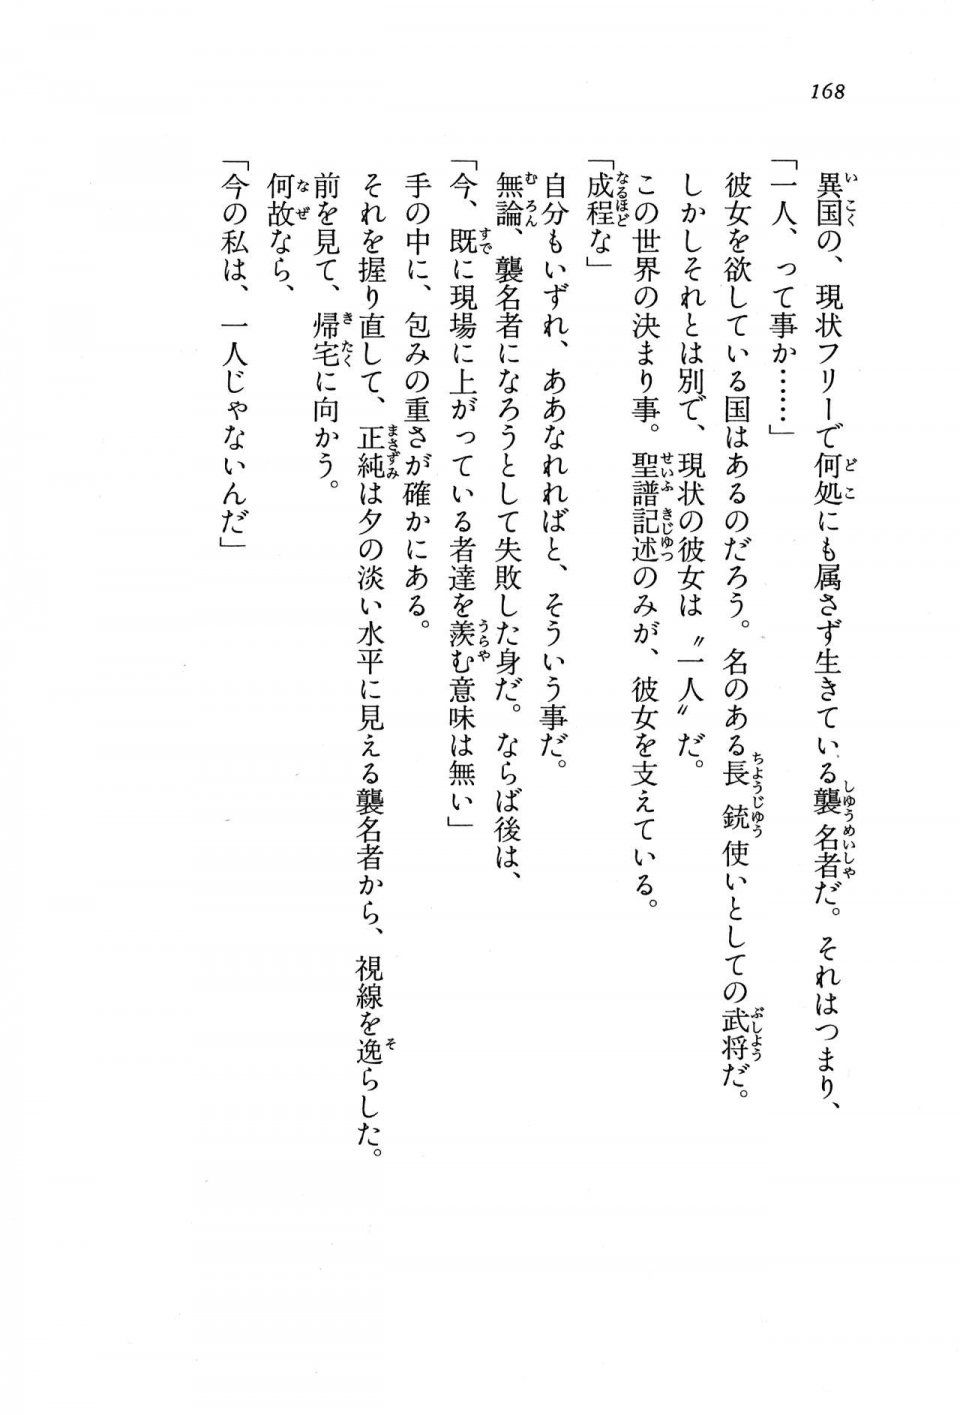 Kyoukai Senjou no Horizon BD Special Mininovel Vol 8(4B) - Photo #172